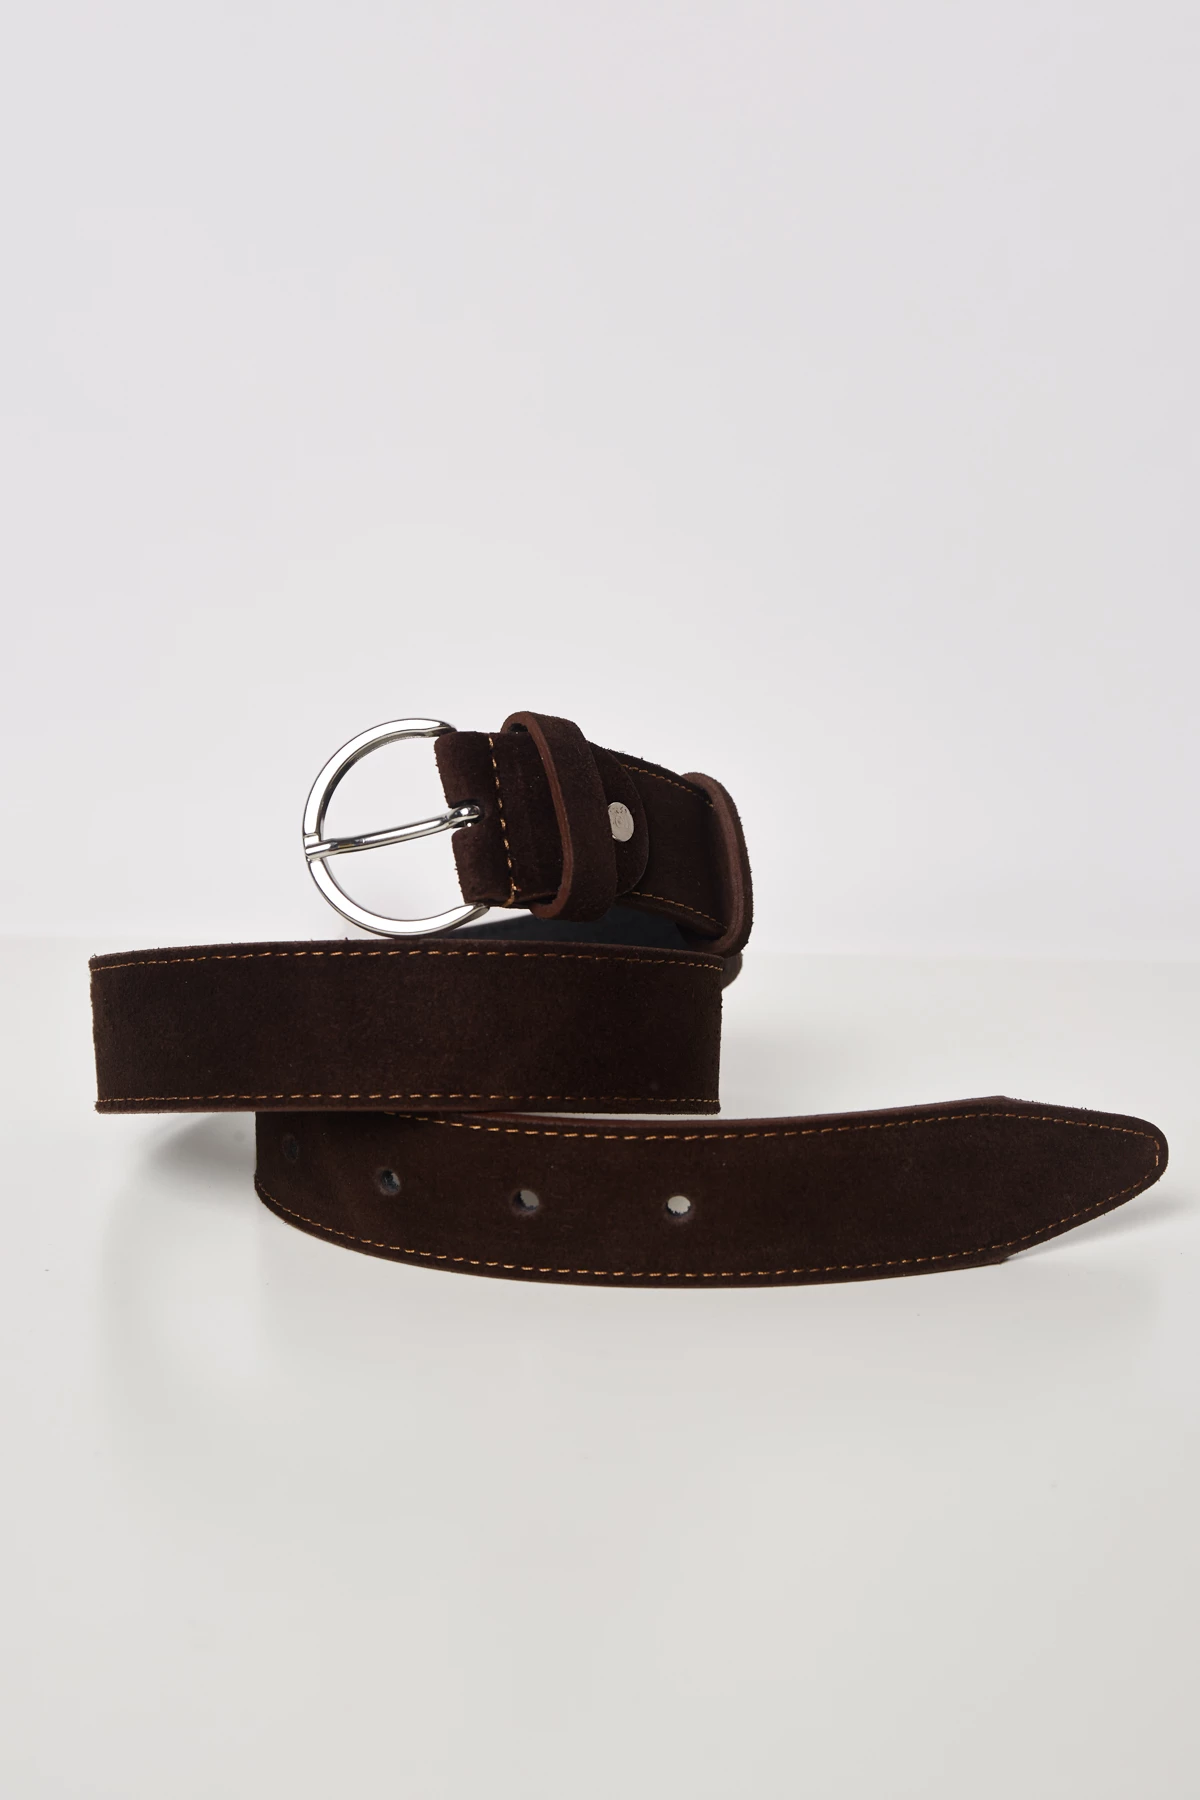 Brown suede belt, photo 1